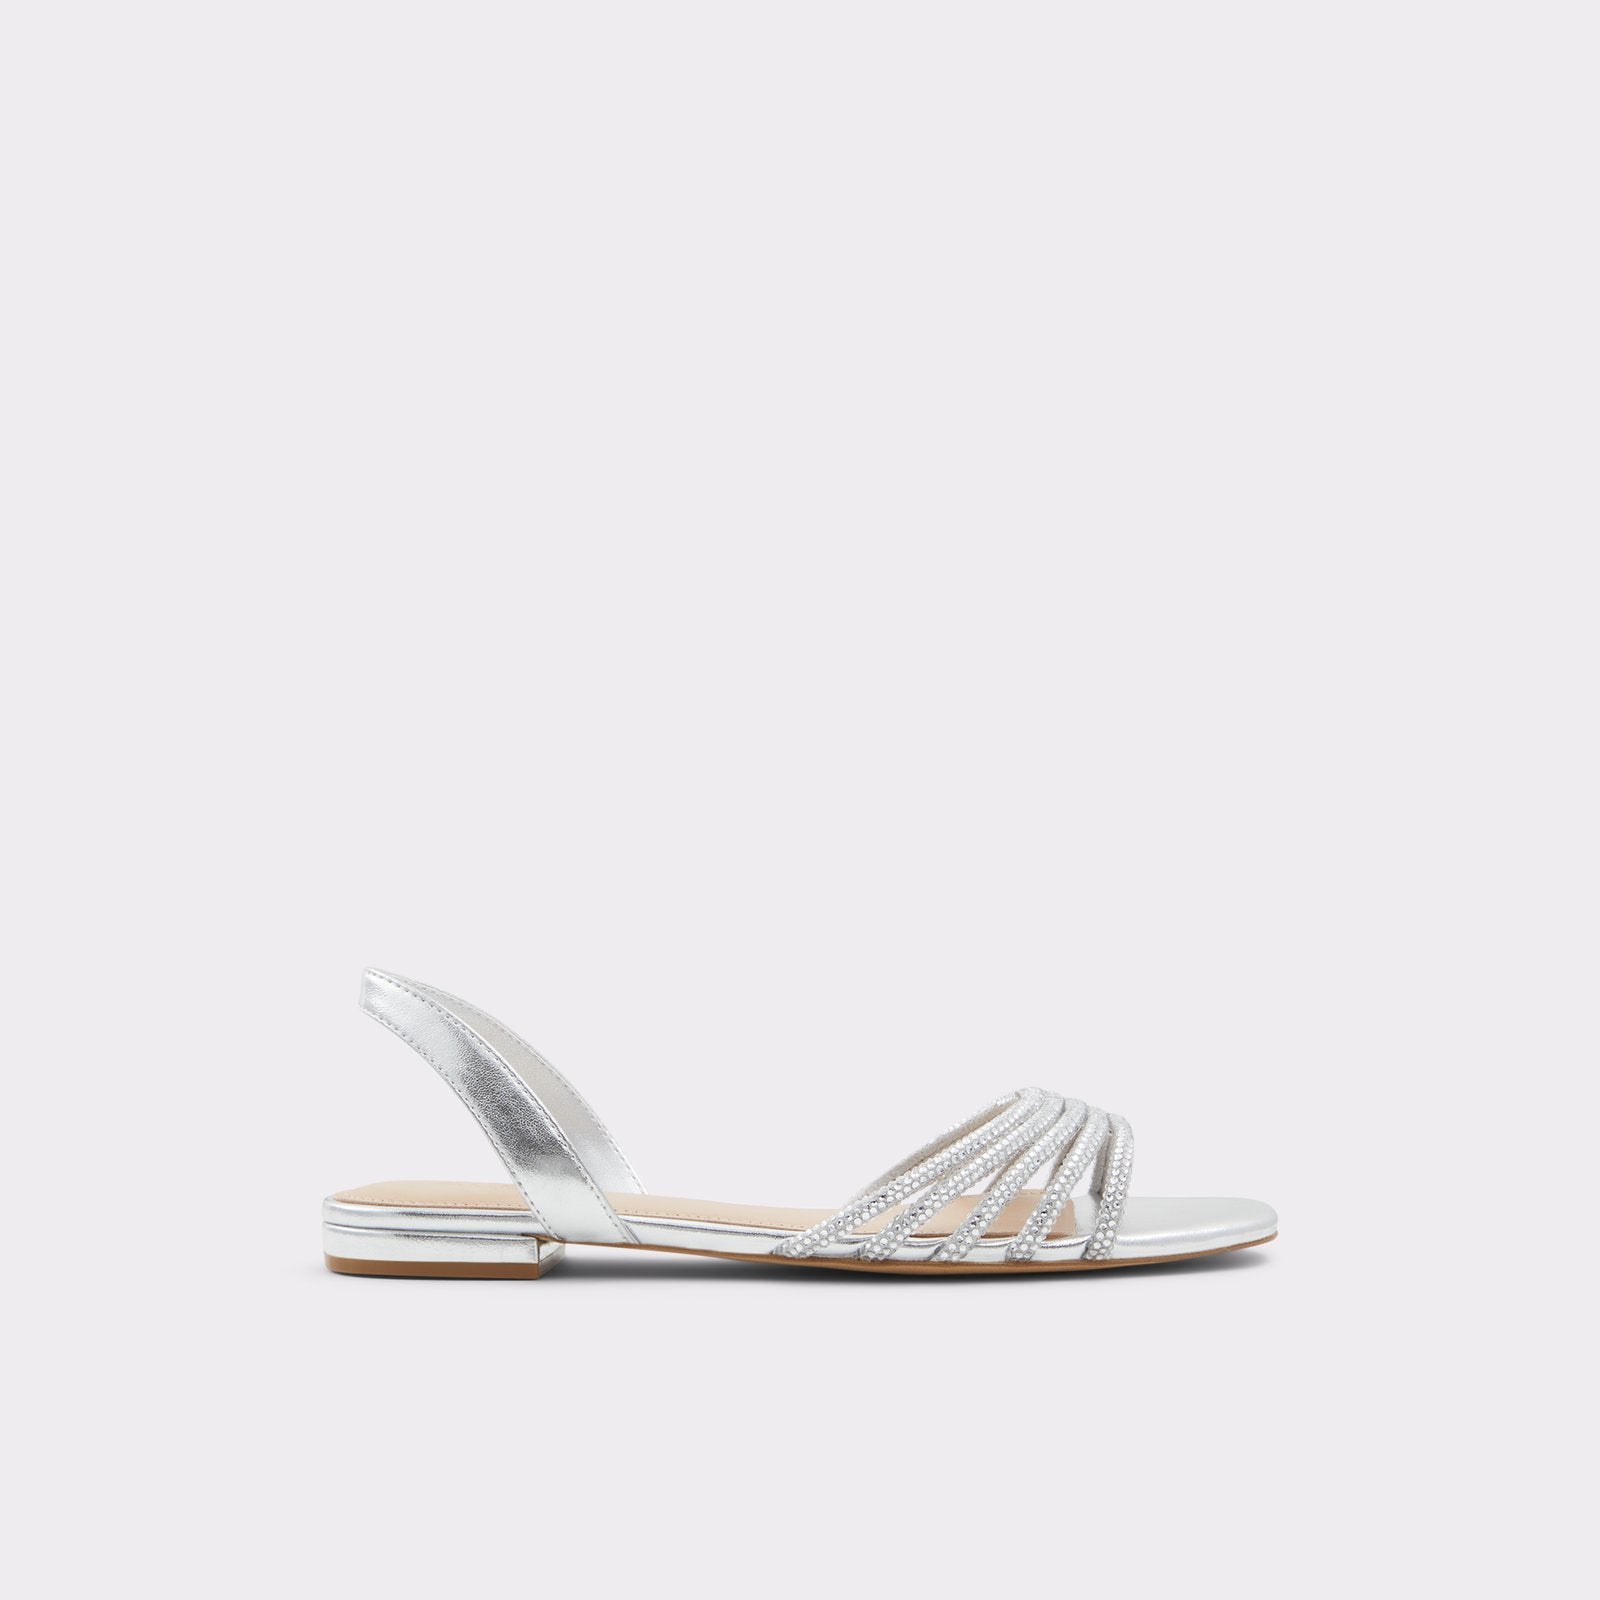 Qimma Women Shoes - Silver - ALDO KSA